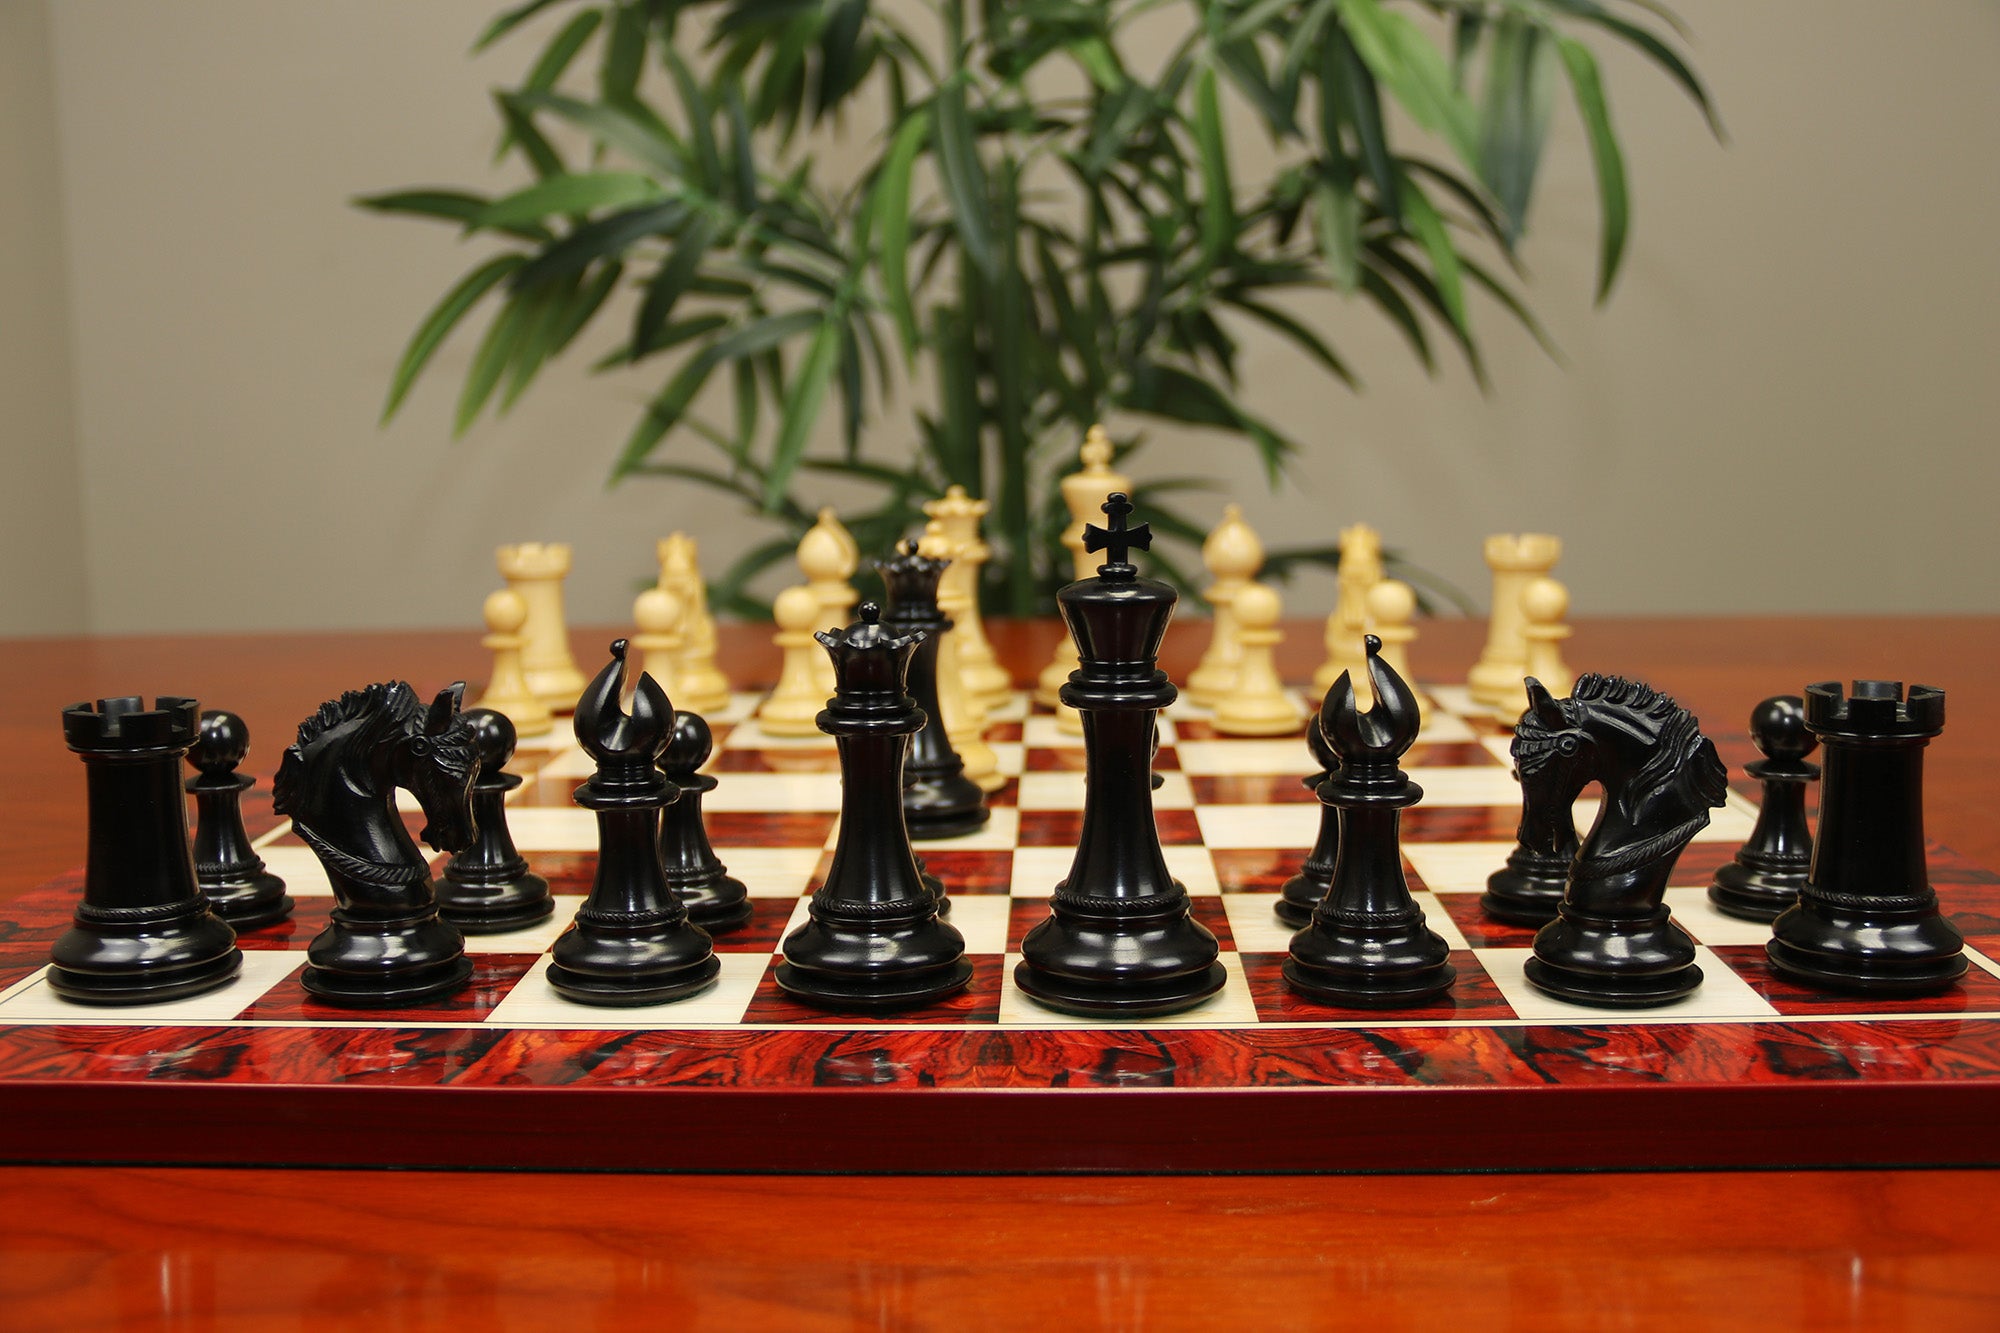 The Roman Britons Artisans Series 4.4" Luxury Staunton Chess Set in Ebony/Boxwood